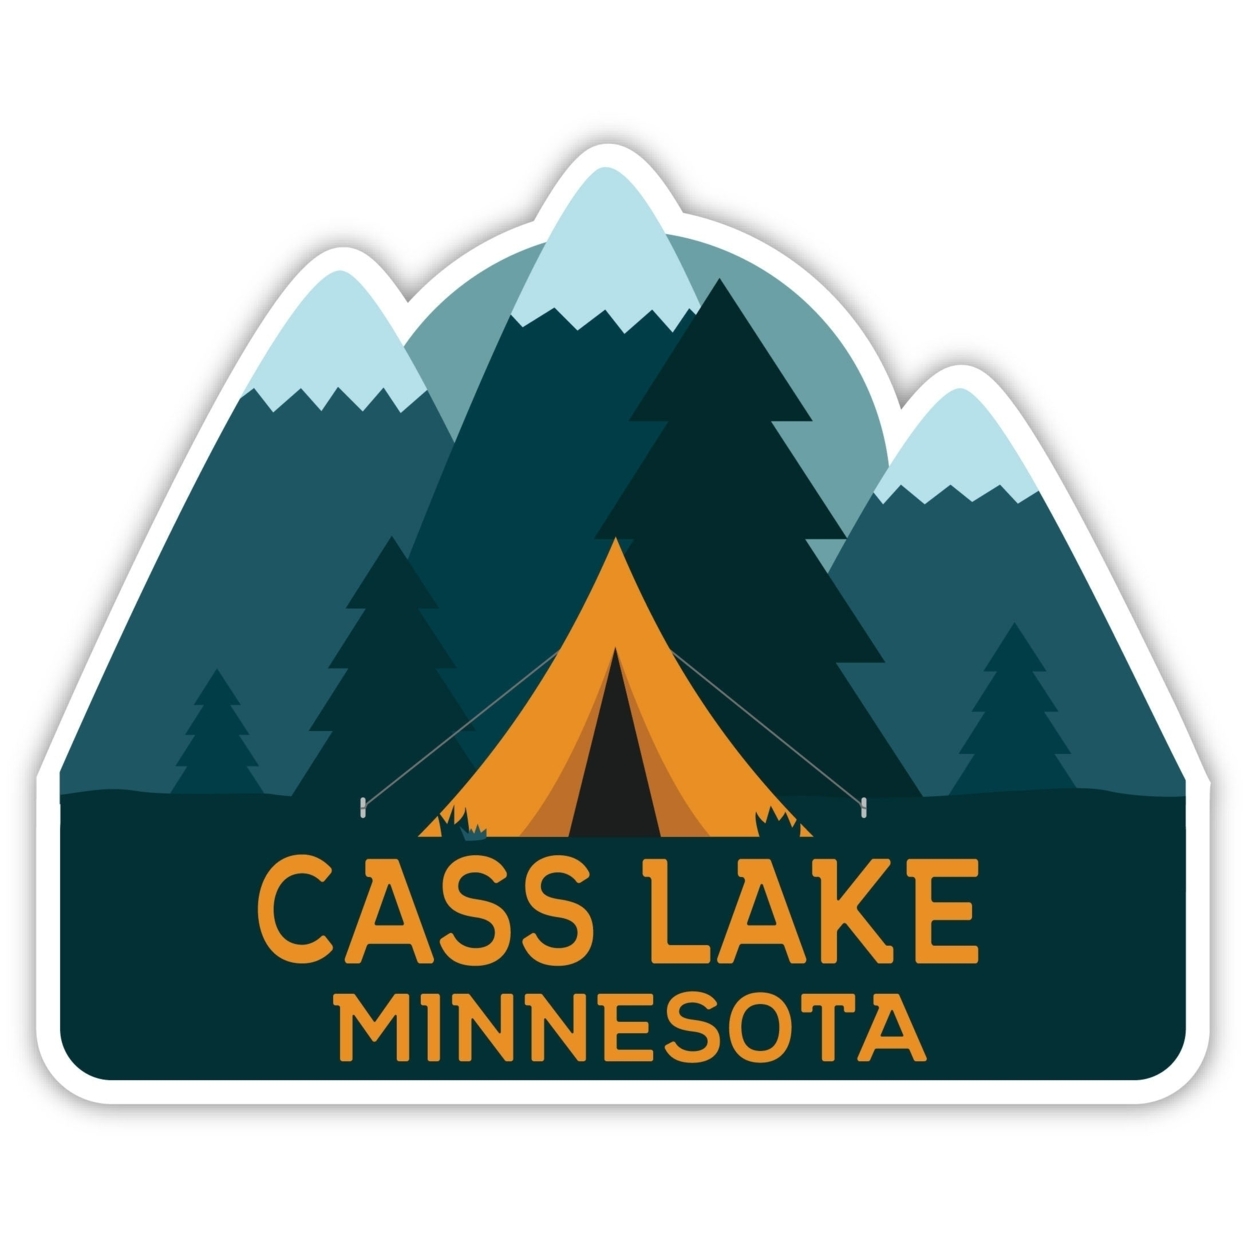 Cass Lake Minnesota Souvenir Decorative Stickers (Choose Theme And Size) - Single Unit, 8-Inch, Tent